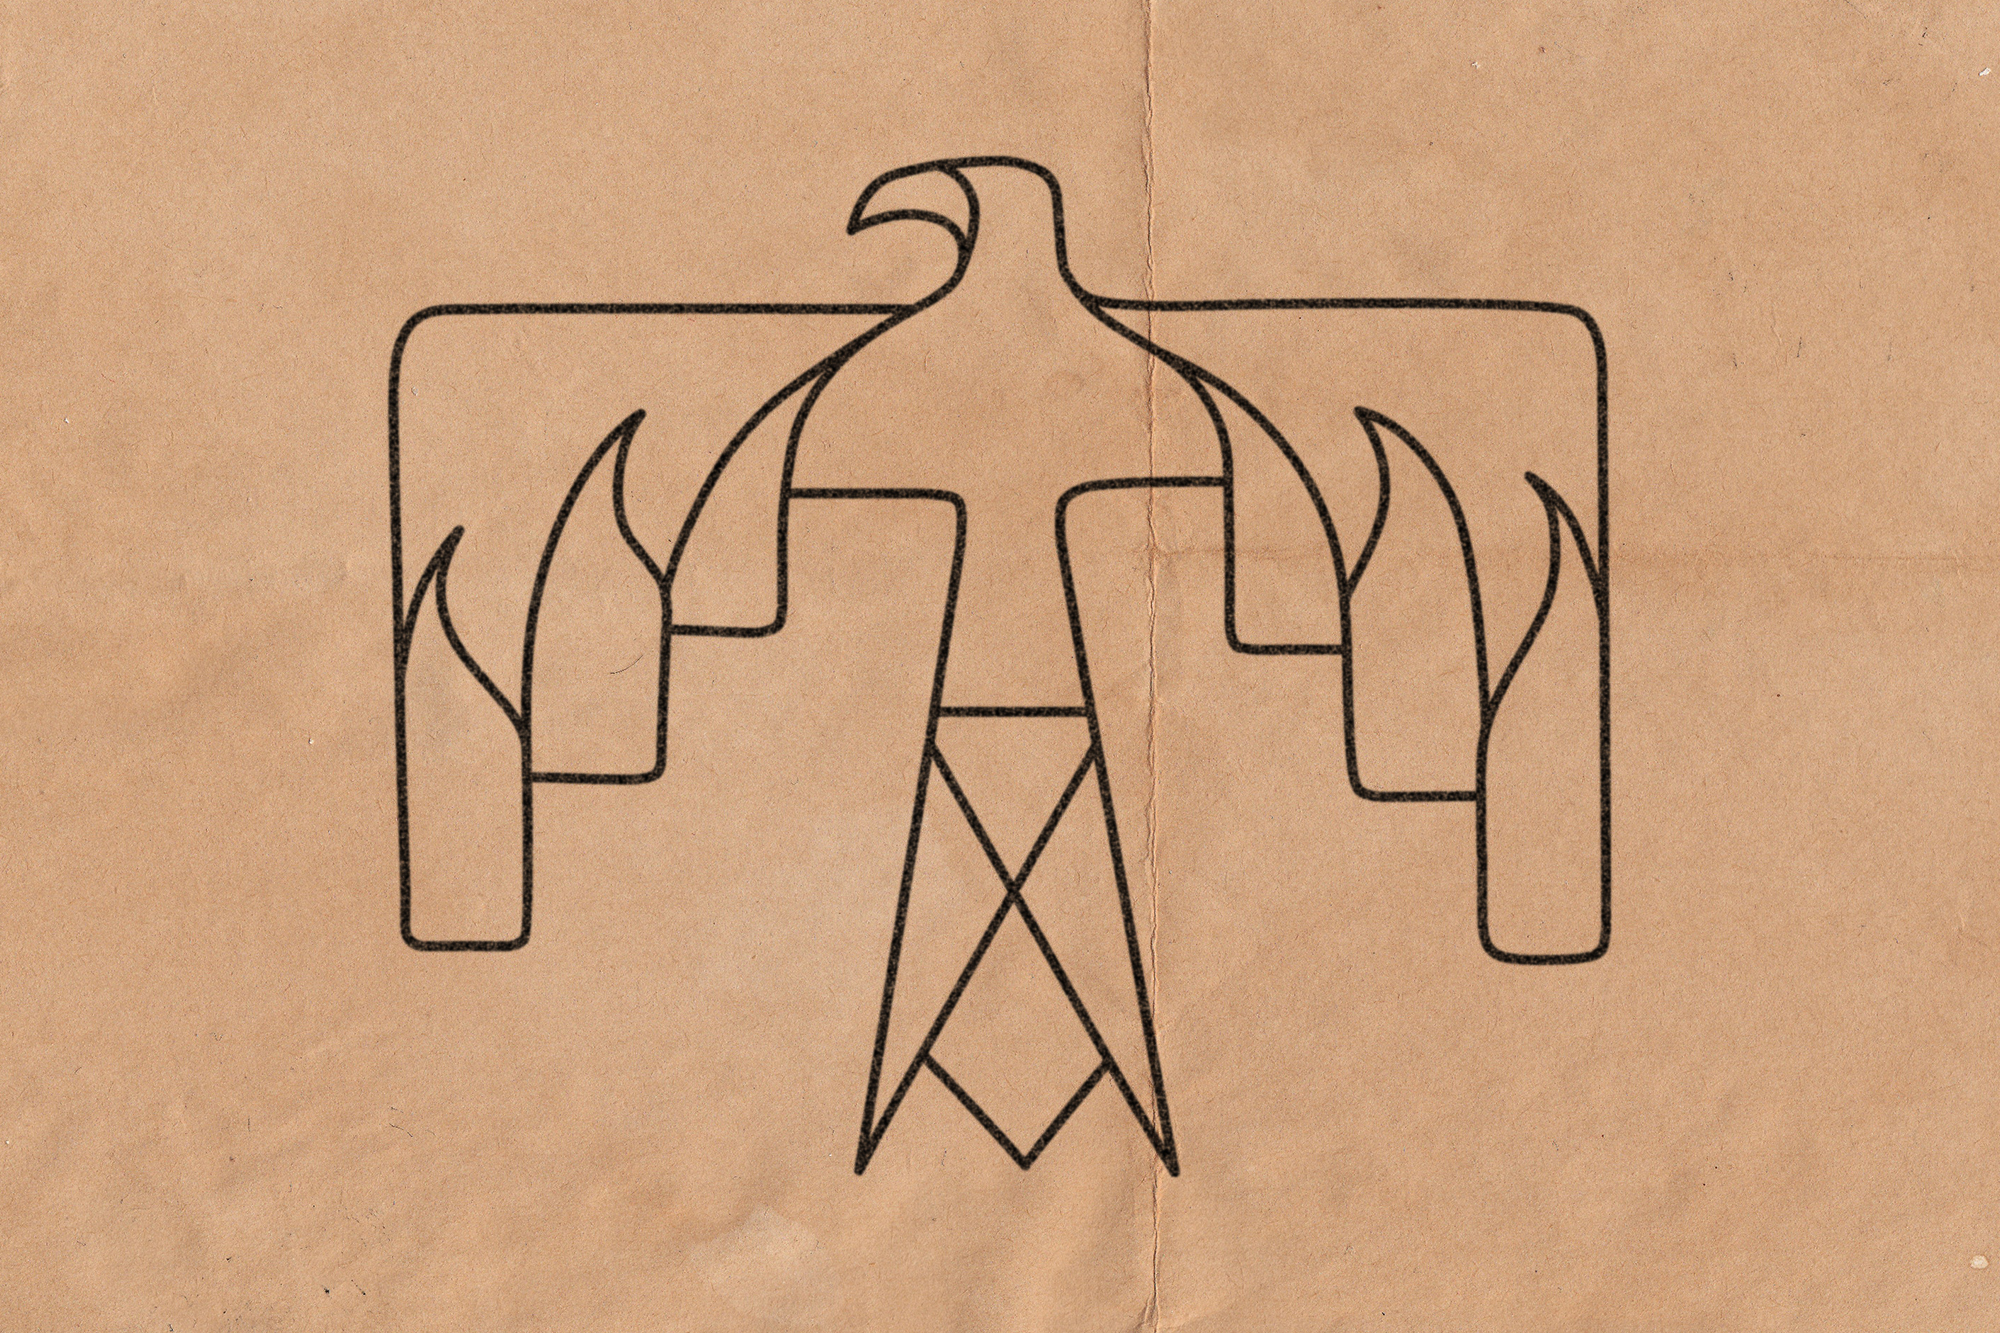 template for a thunderbird native american